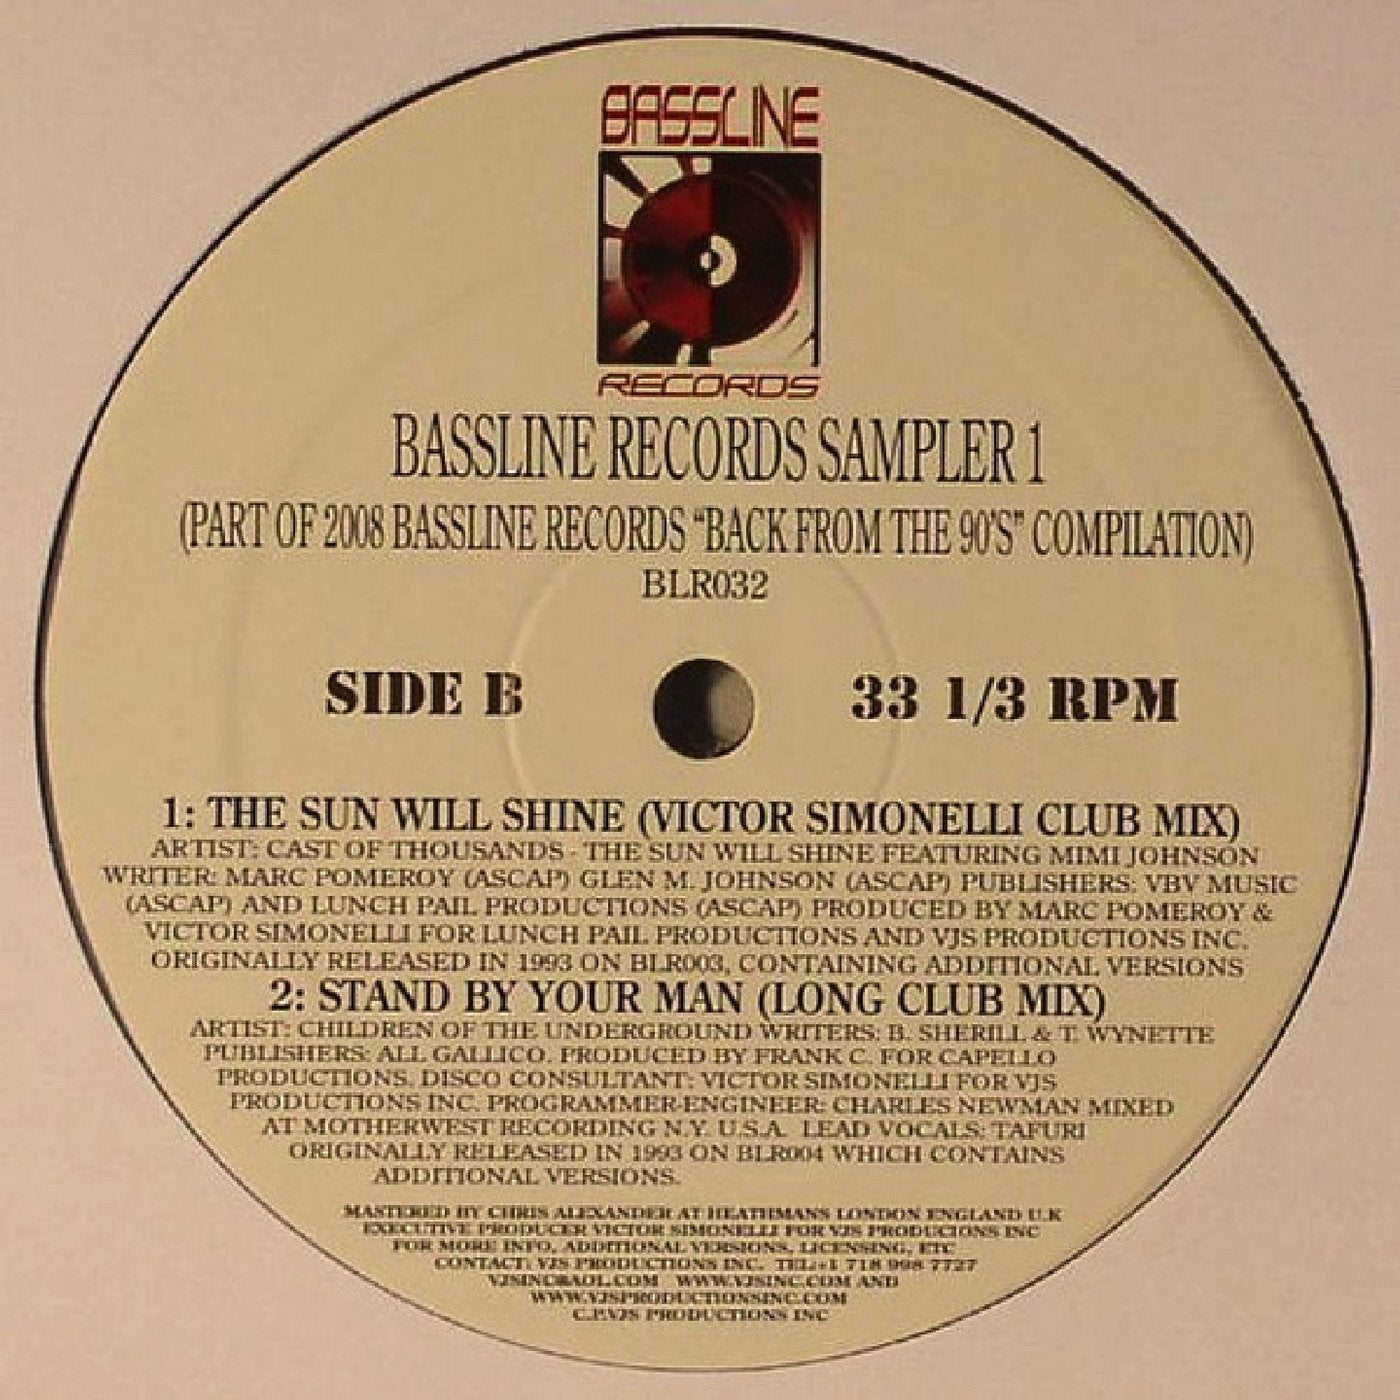 Bassline Records Sampler 1